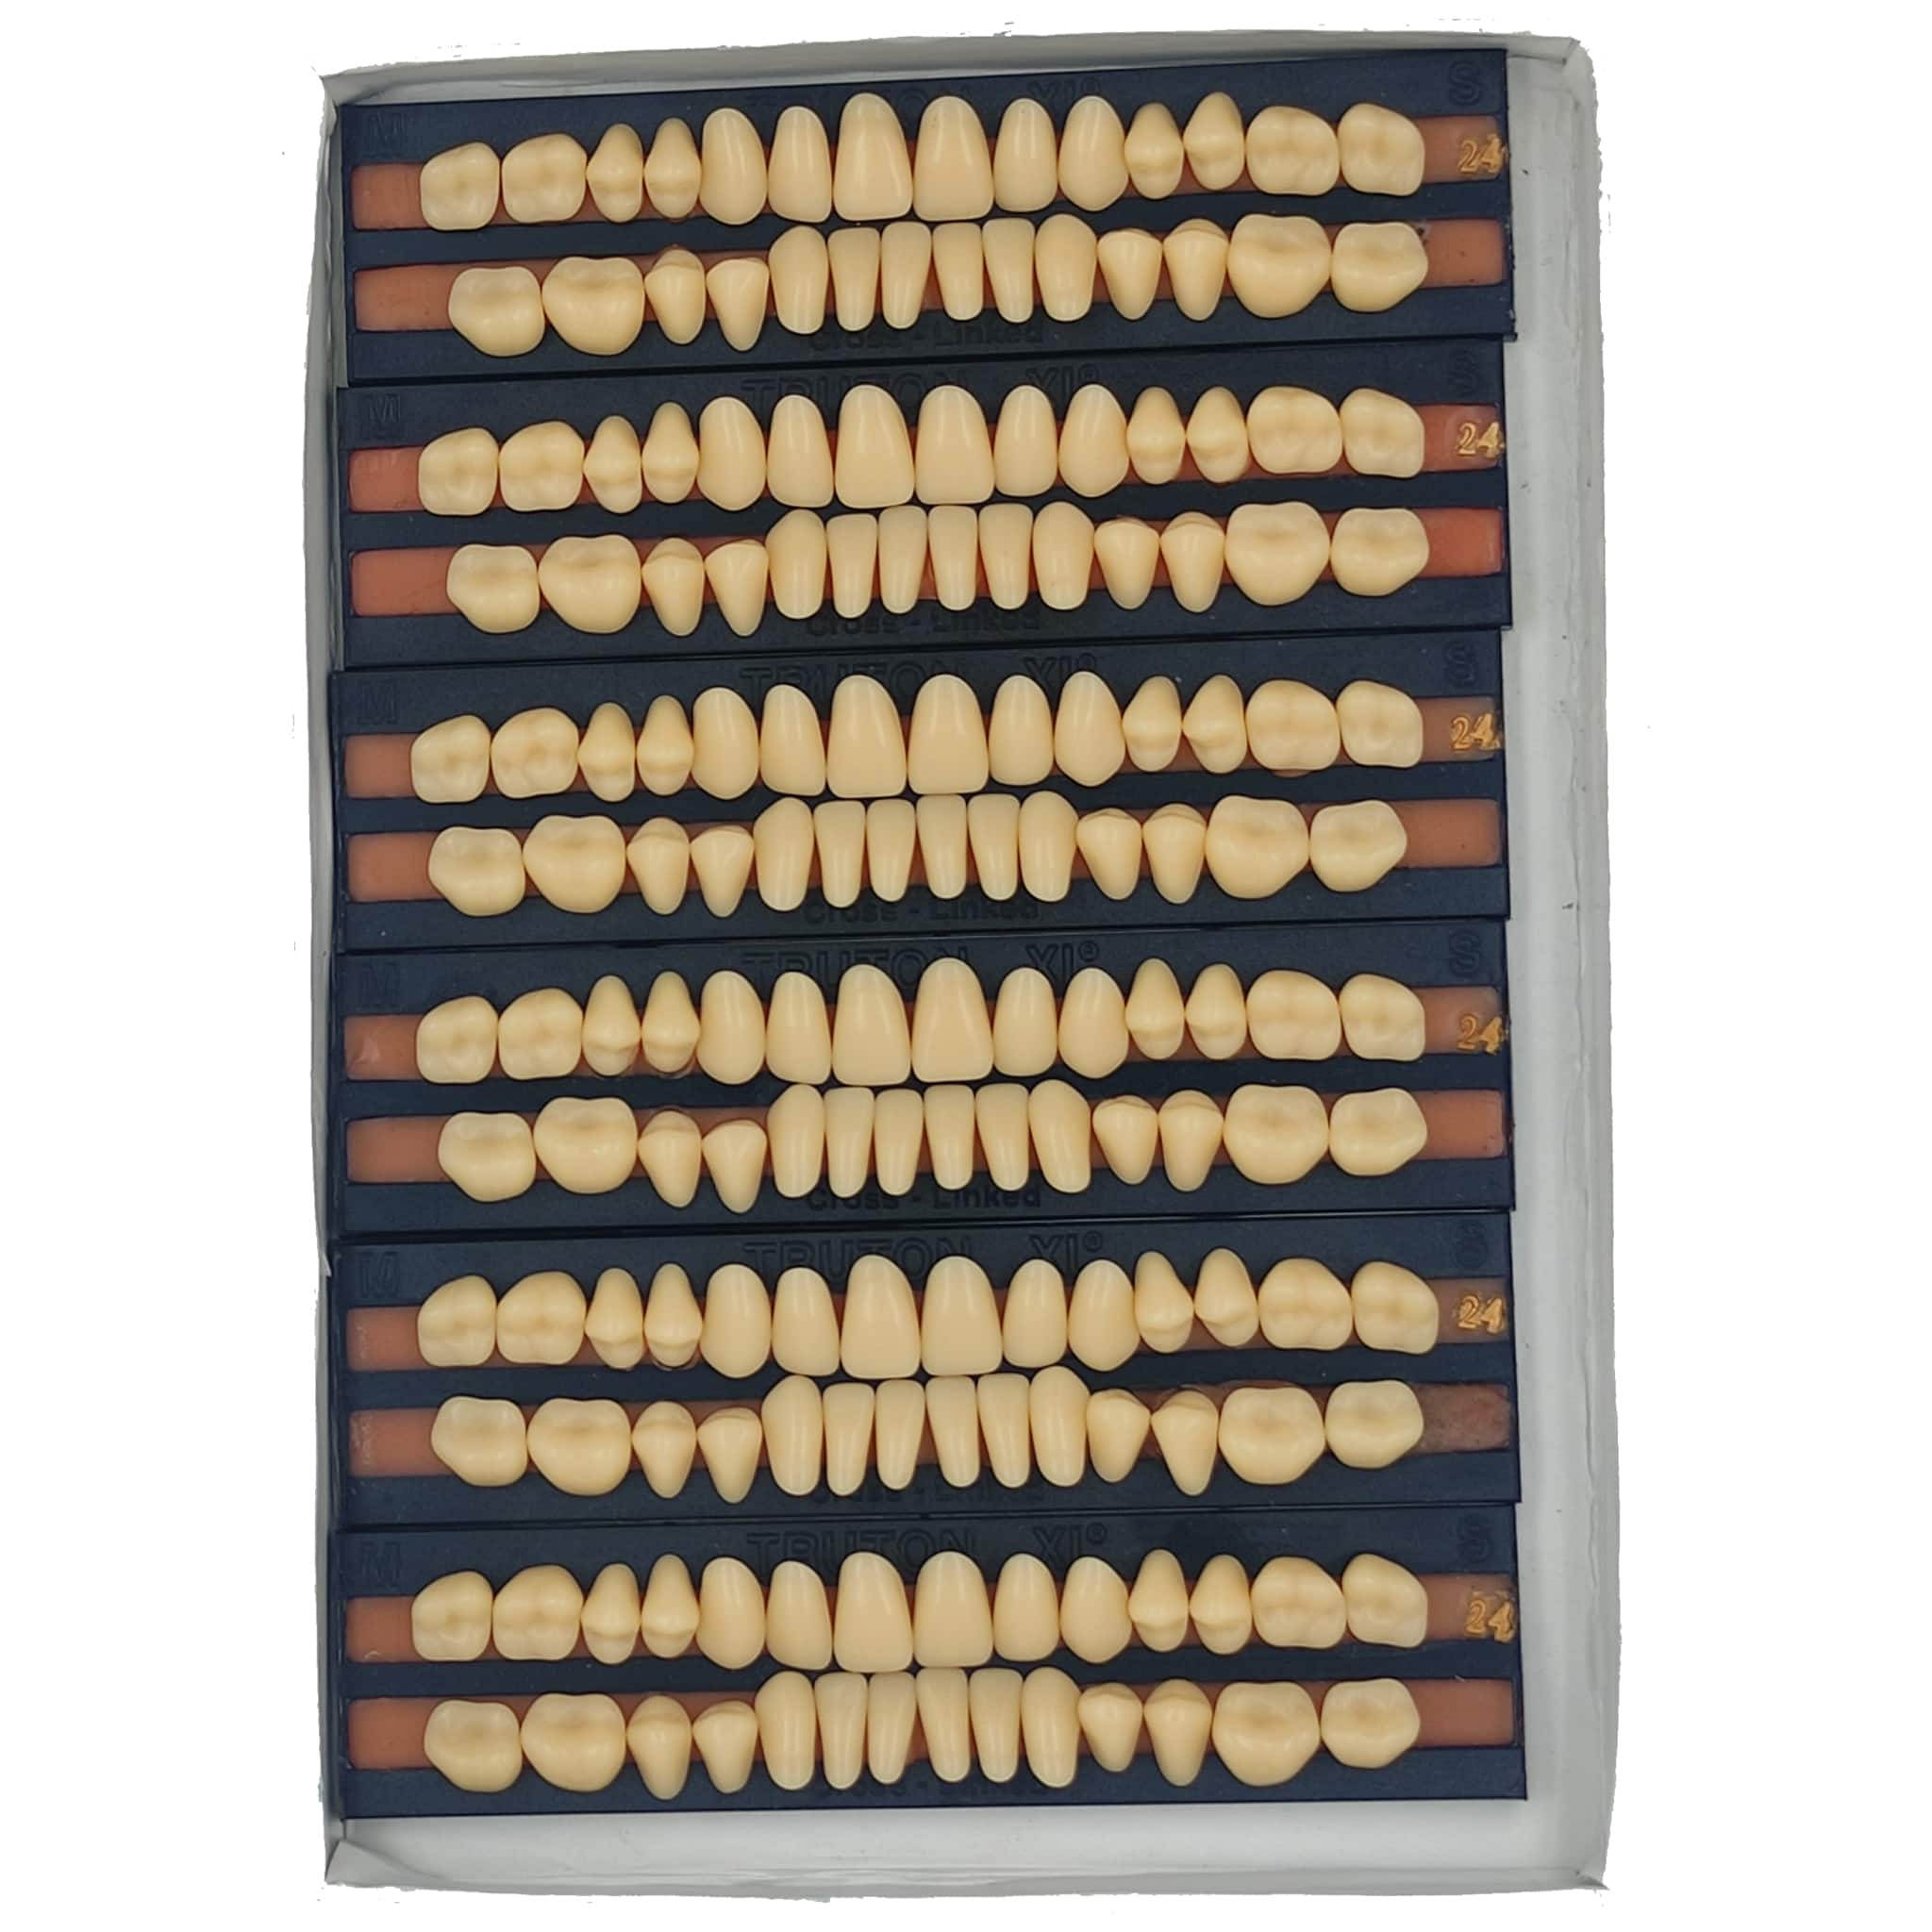 Truton Artificial Teeth Full Set (Box of 6) Shade 24